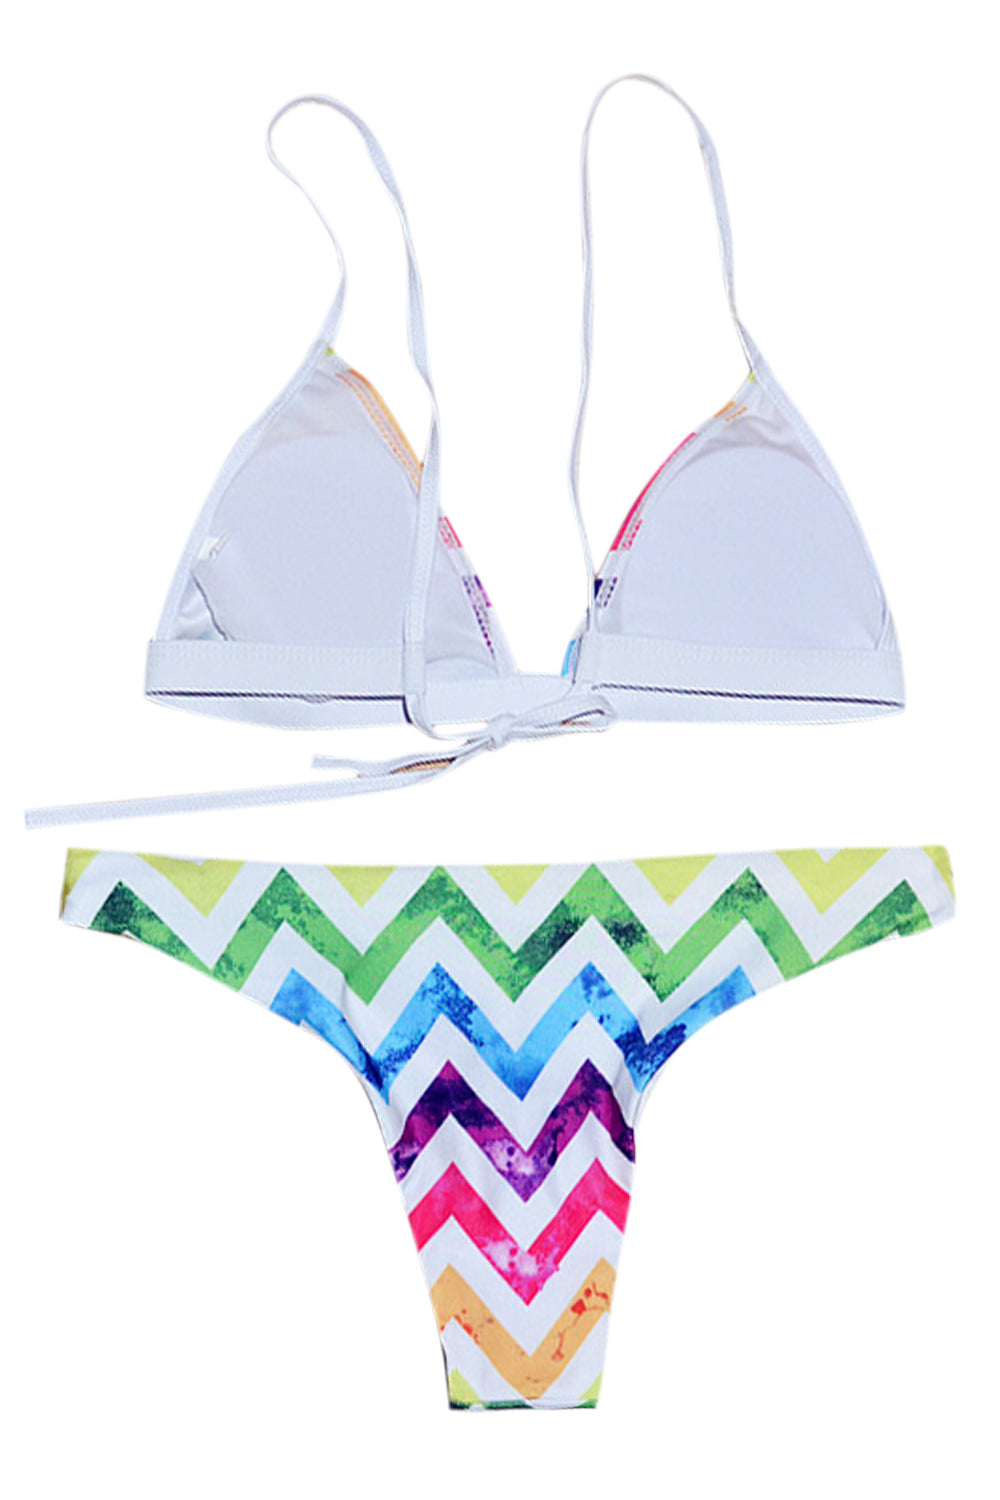 Iyasson Colorful Printing Triangle Top Bikini Set